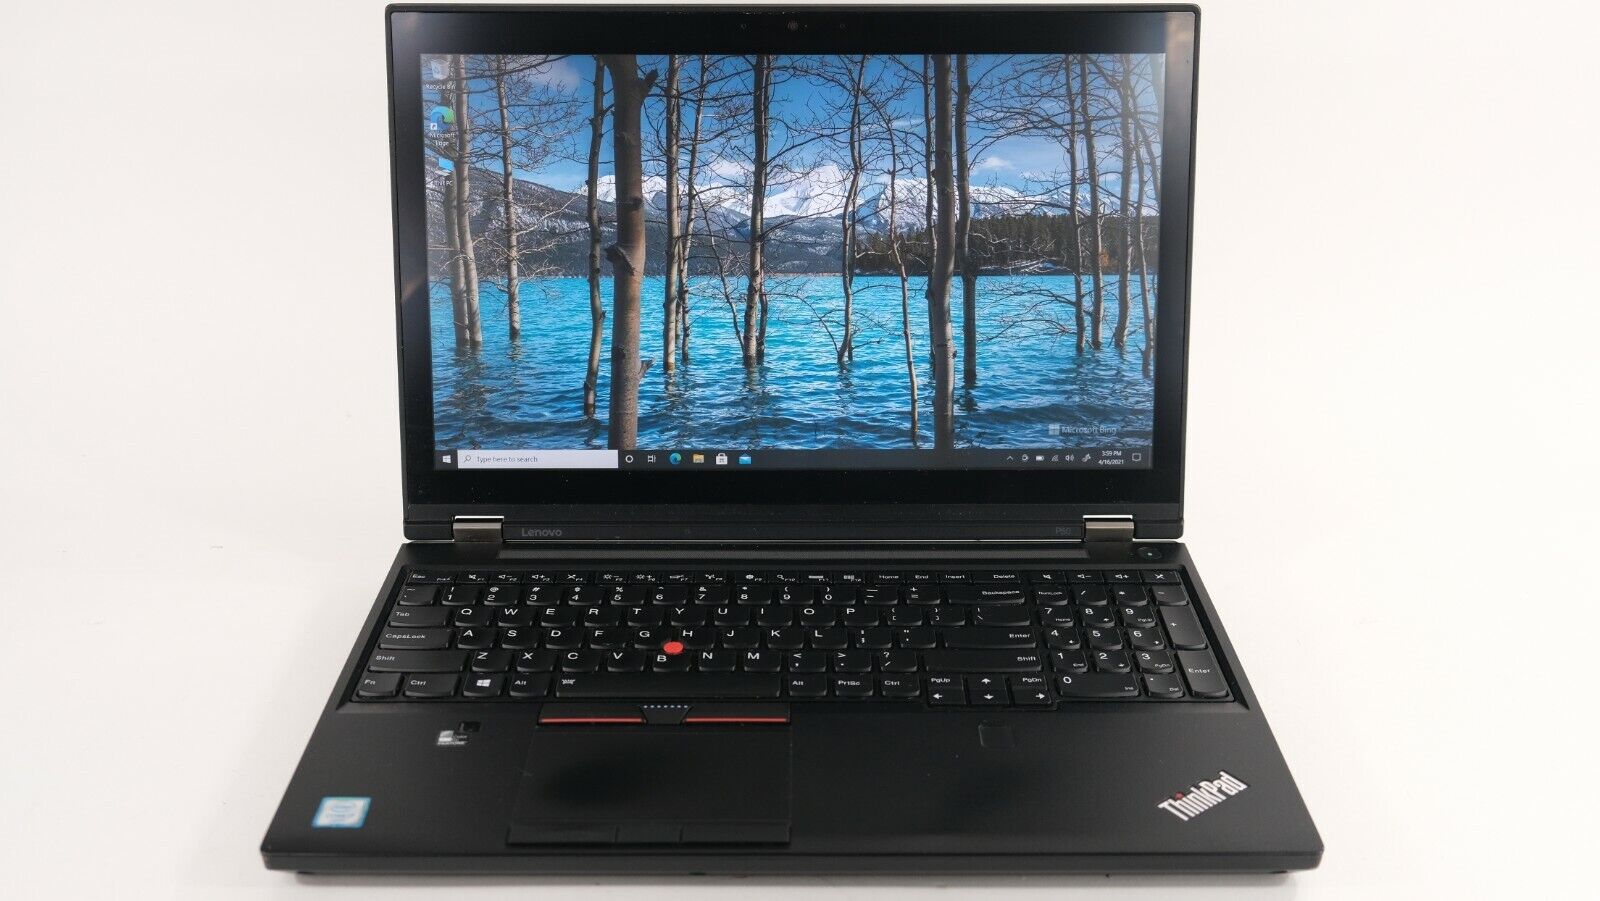 Lenovo ThinkPad P50 Laptop | Intel Core i7-6700HQ 16GB RAM 256GB SSD Windows 10 